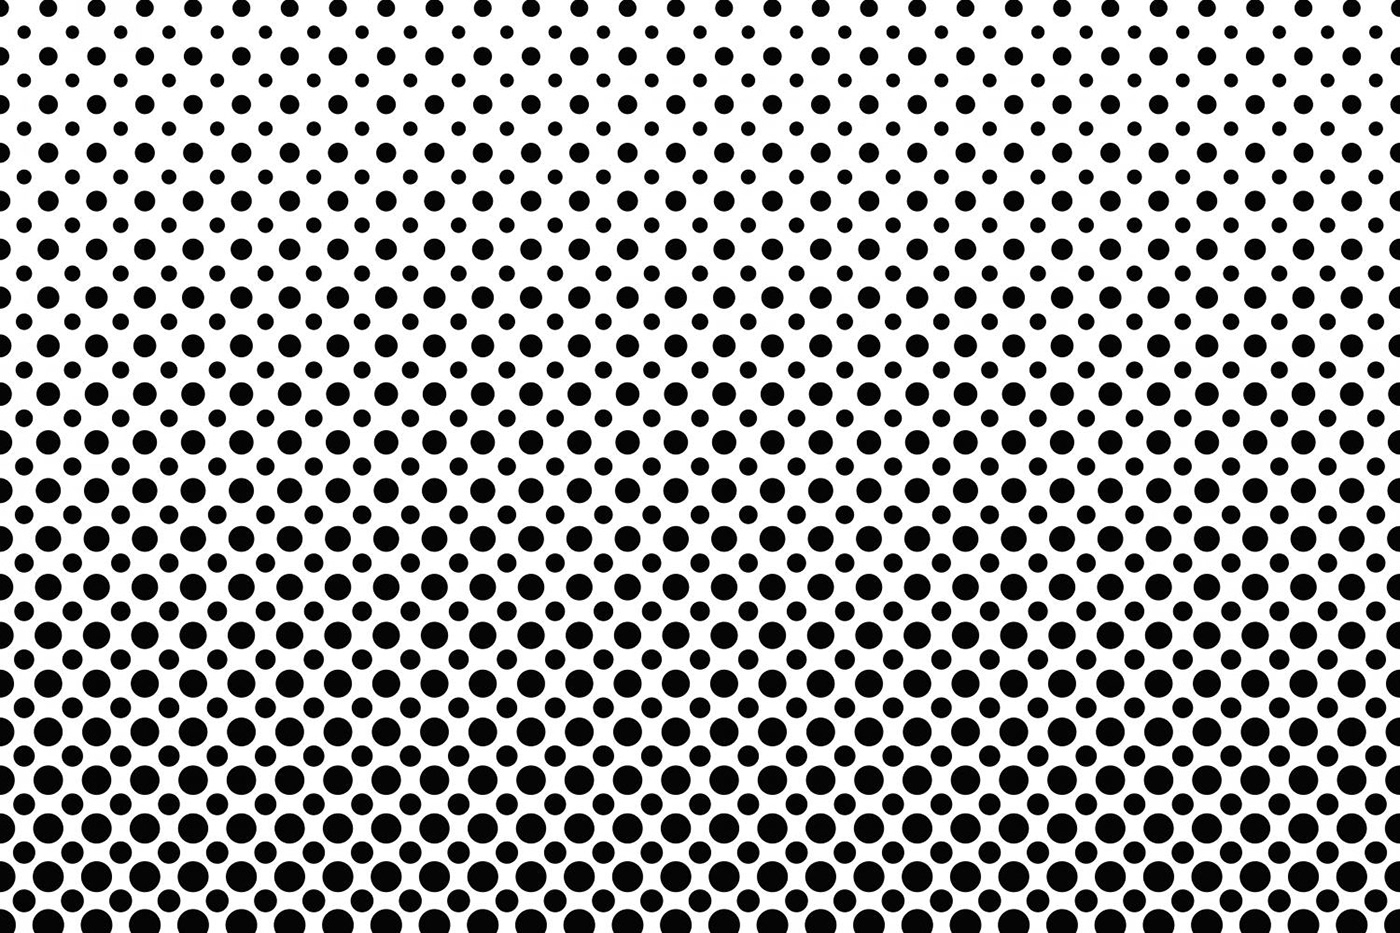 pattern monochrome dot circle Dot Pattern black and white vector Patterns background monochrome pattern